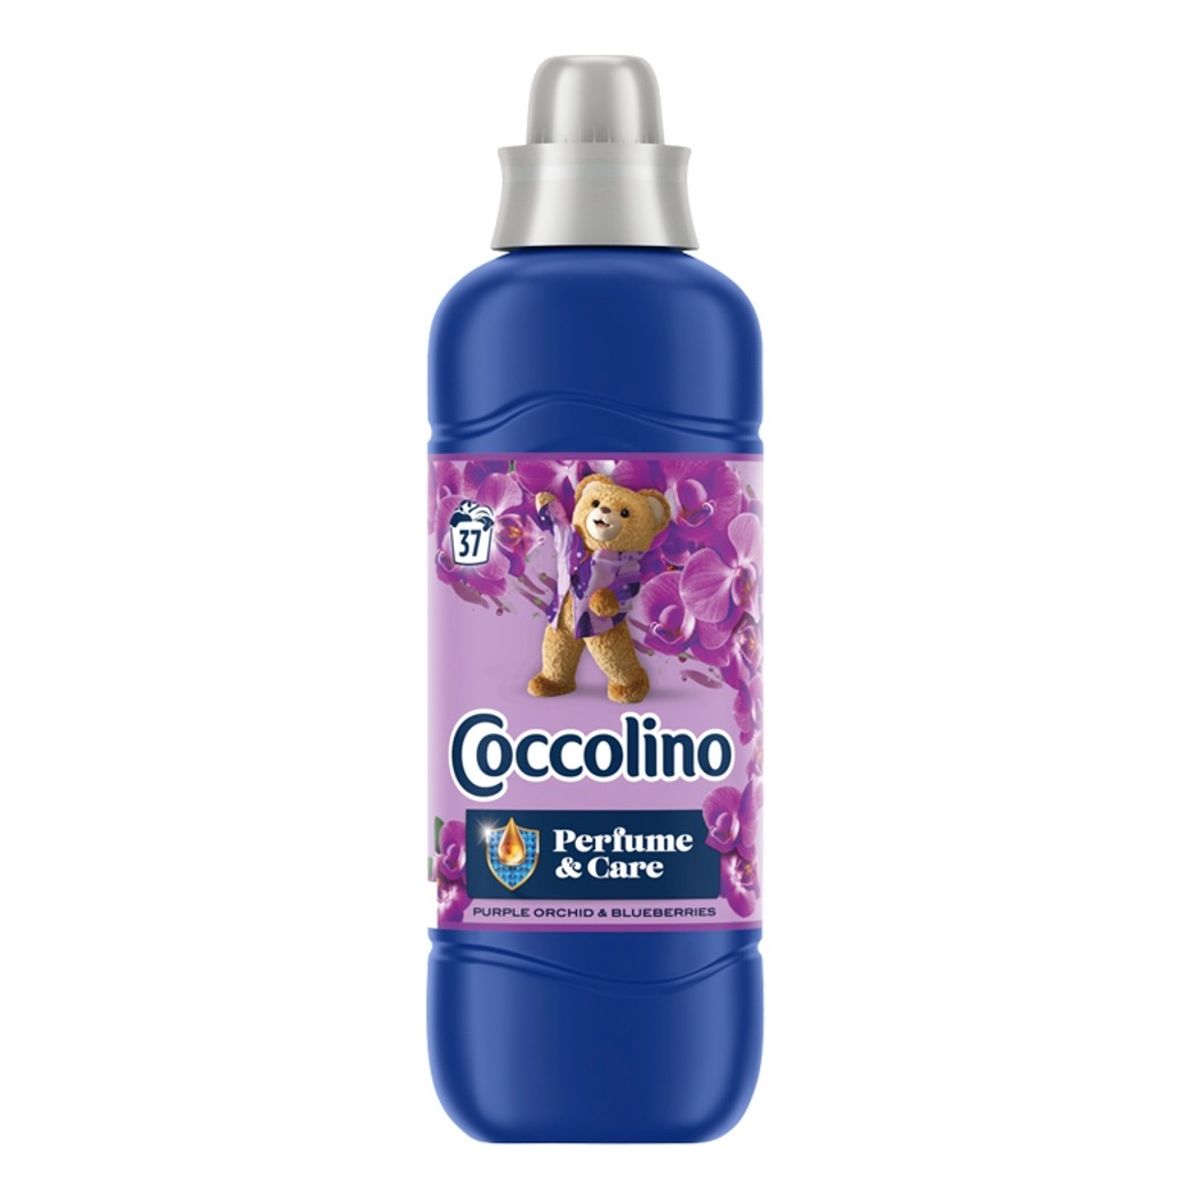 Coccolino Perfume & Care Płyn do Płukania Tkanin Purple Orchid & Blueberries (37 Prań) 925ml